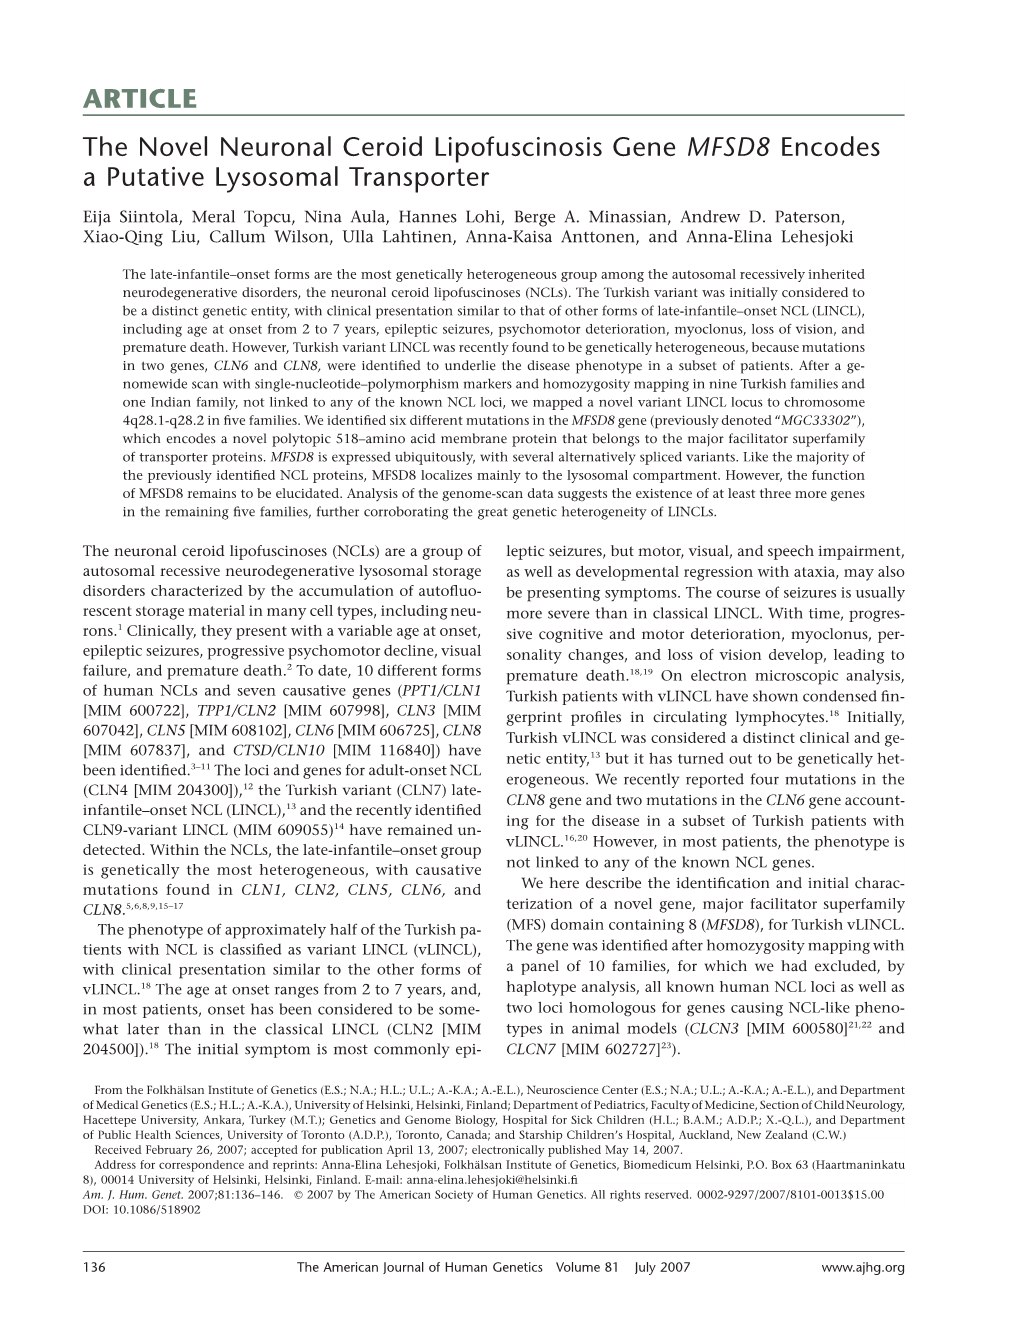 ARTICLE the Novel Neuronal Ceroid Lipofuscinosis Gene MFSD8 Encodes a Putative Lysosomal Transporter